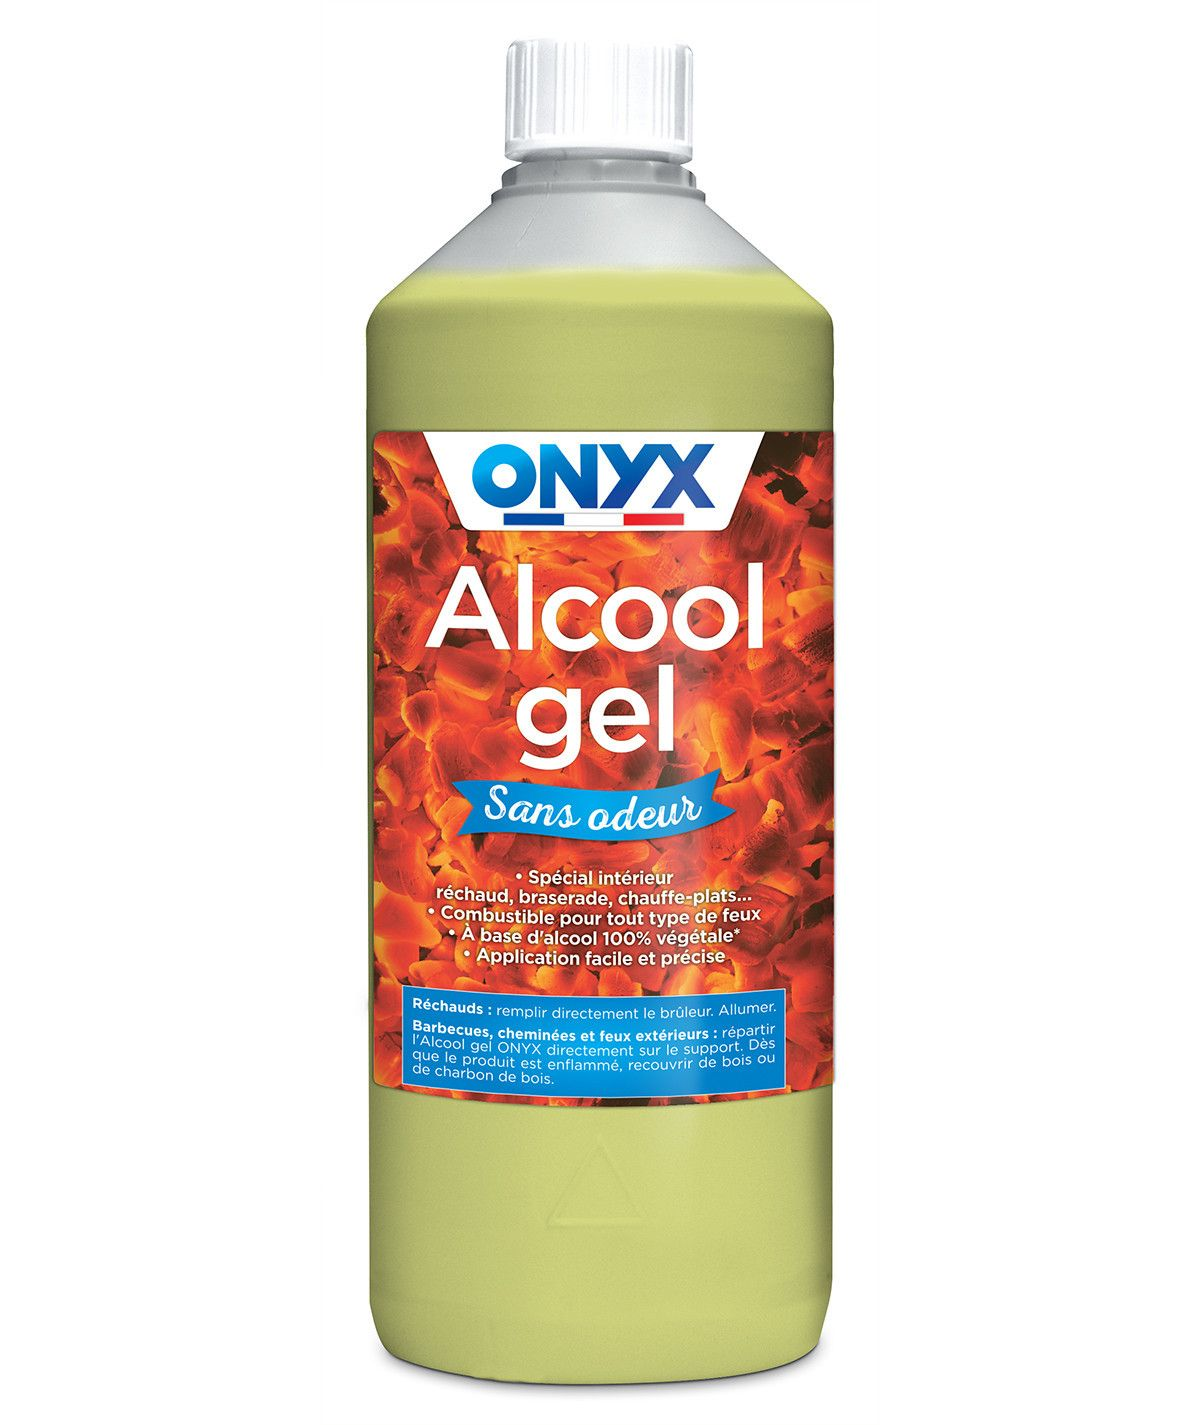 Odourless alcohol gel, 1 liter